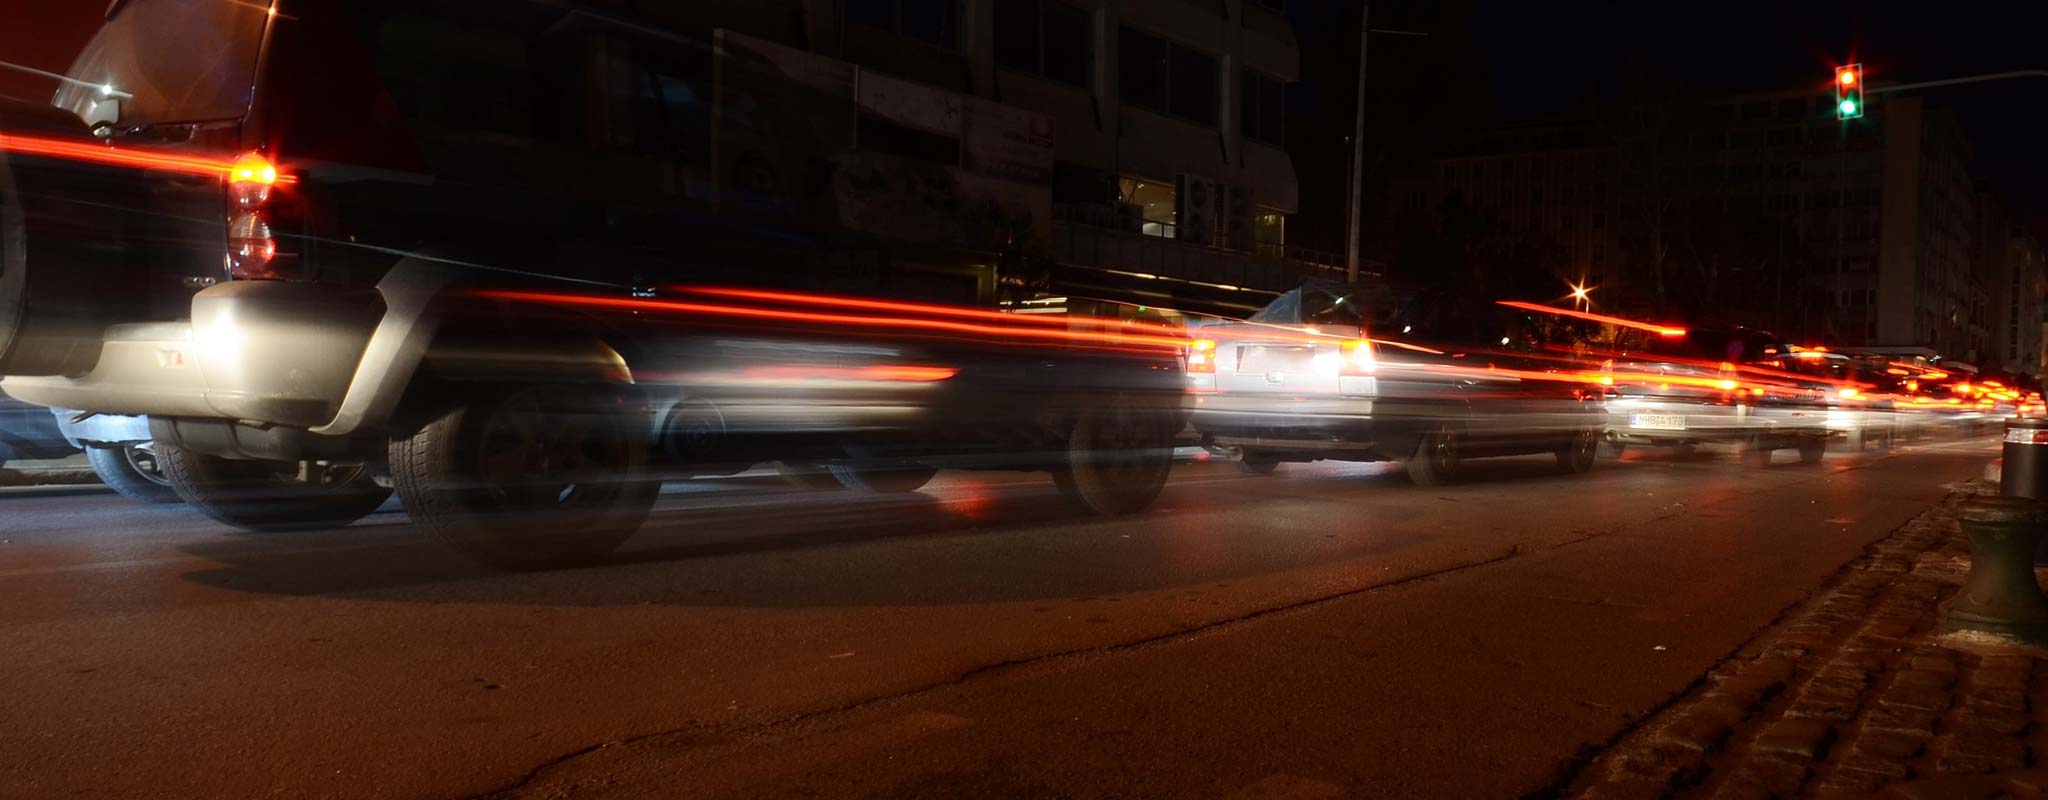 Brake lights shining on a busy city street.